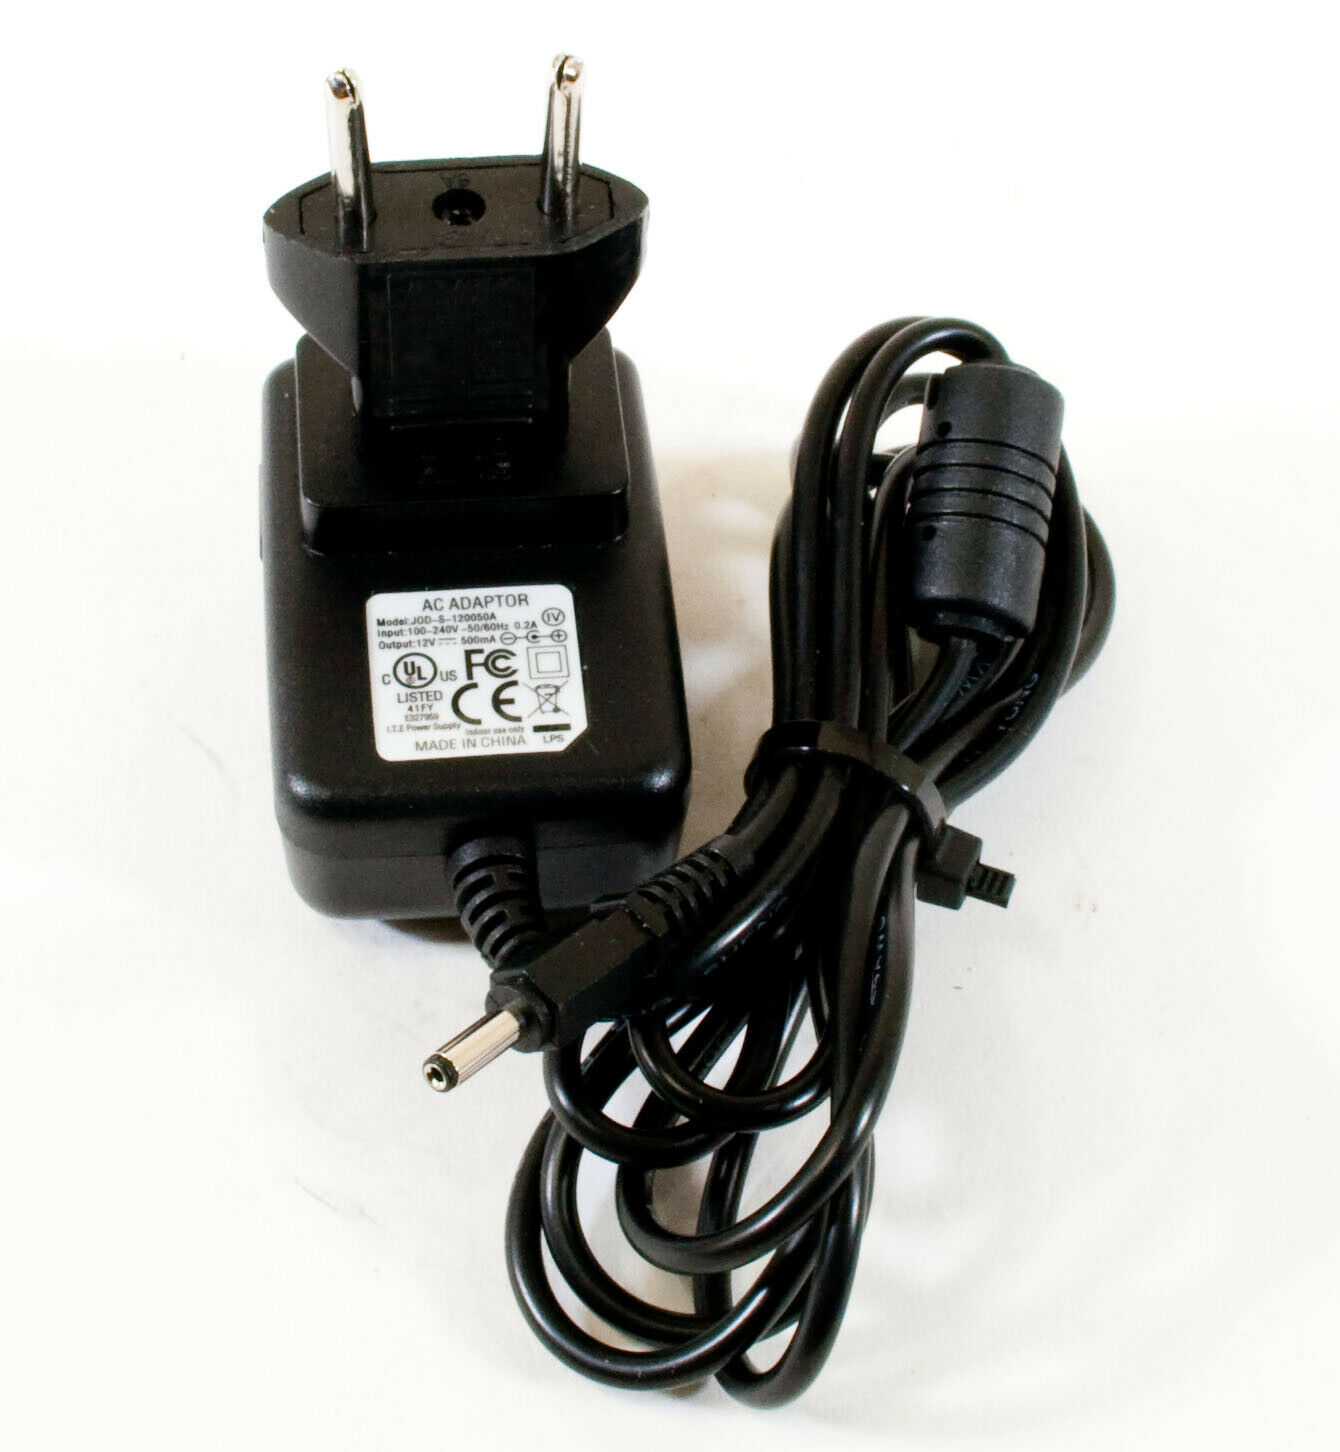 JOD-S-120050A AC Adapter 12V 500mA Original I.T.E. Power Supply Output Current: 500 mA Type: Power Adapter MPN: JOD-S